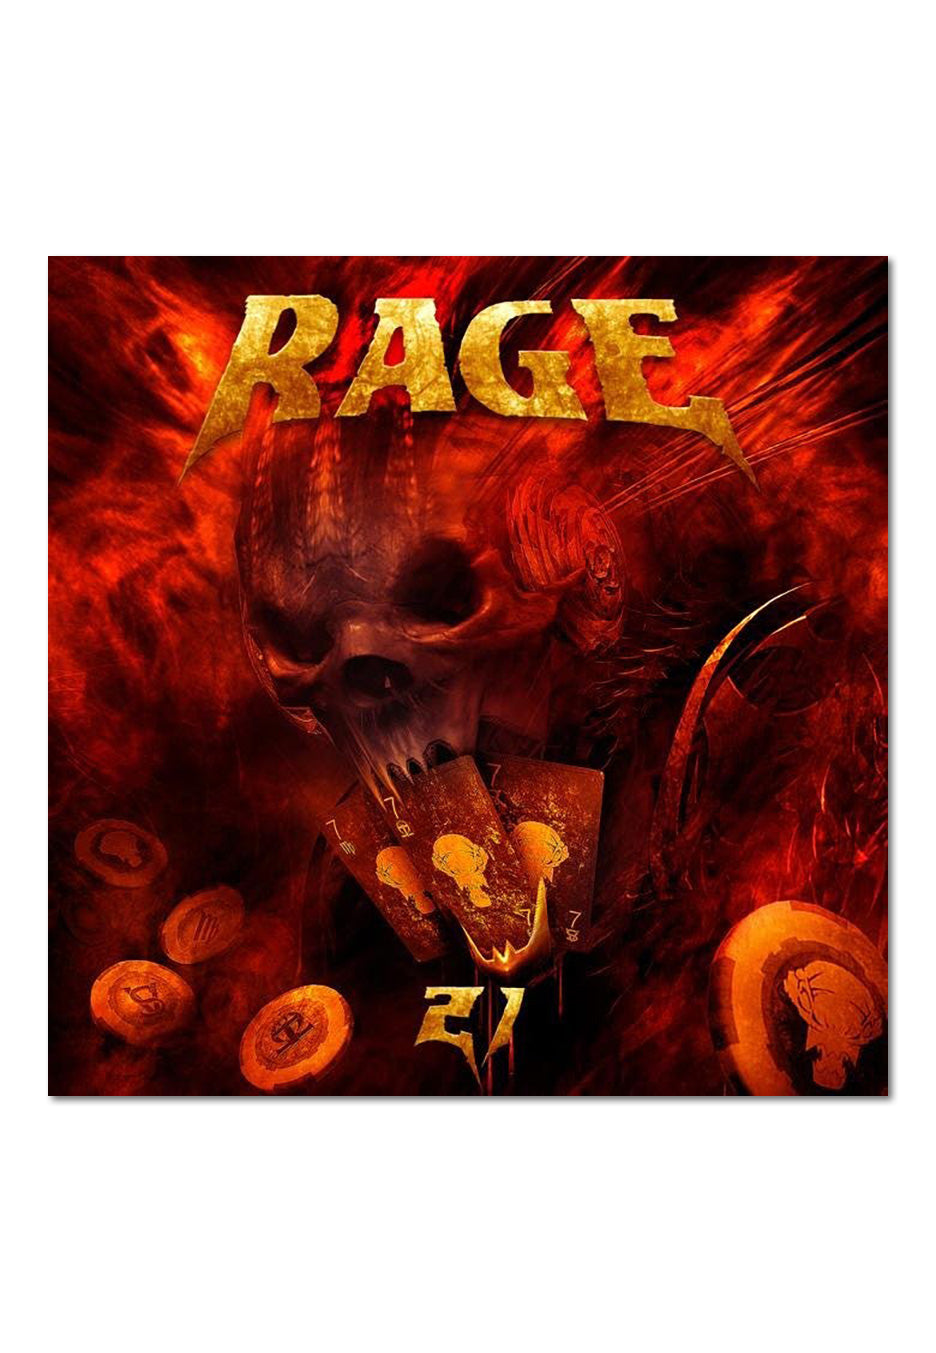 Rage - 21 - CD